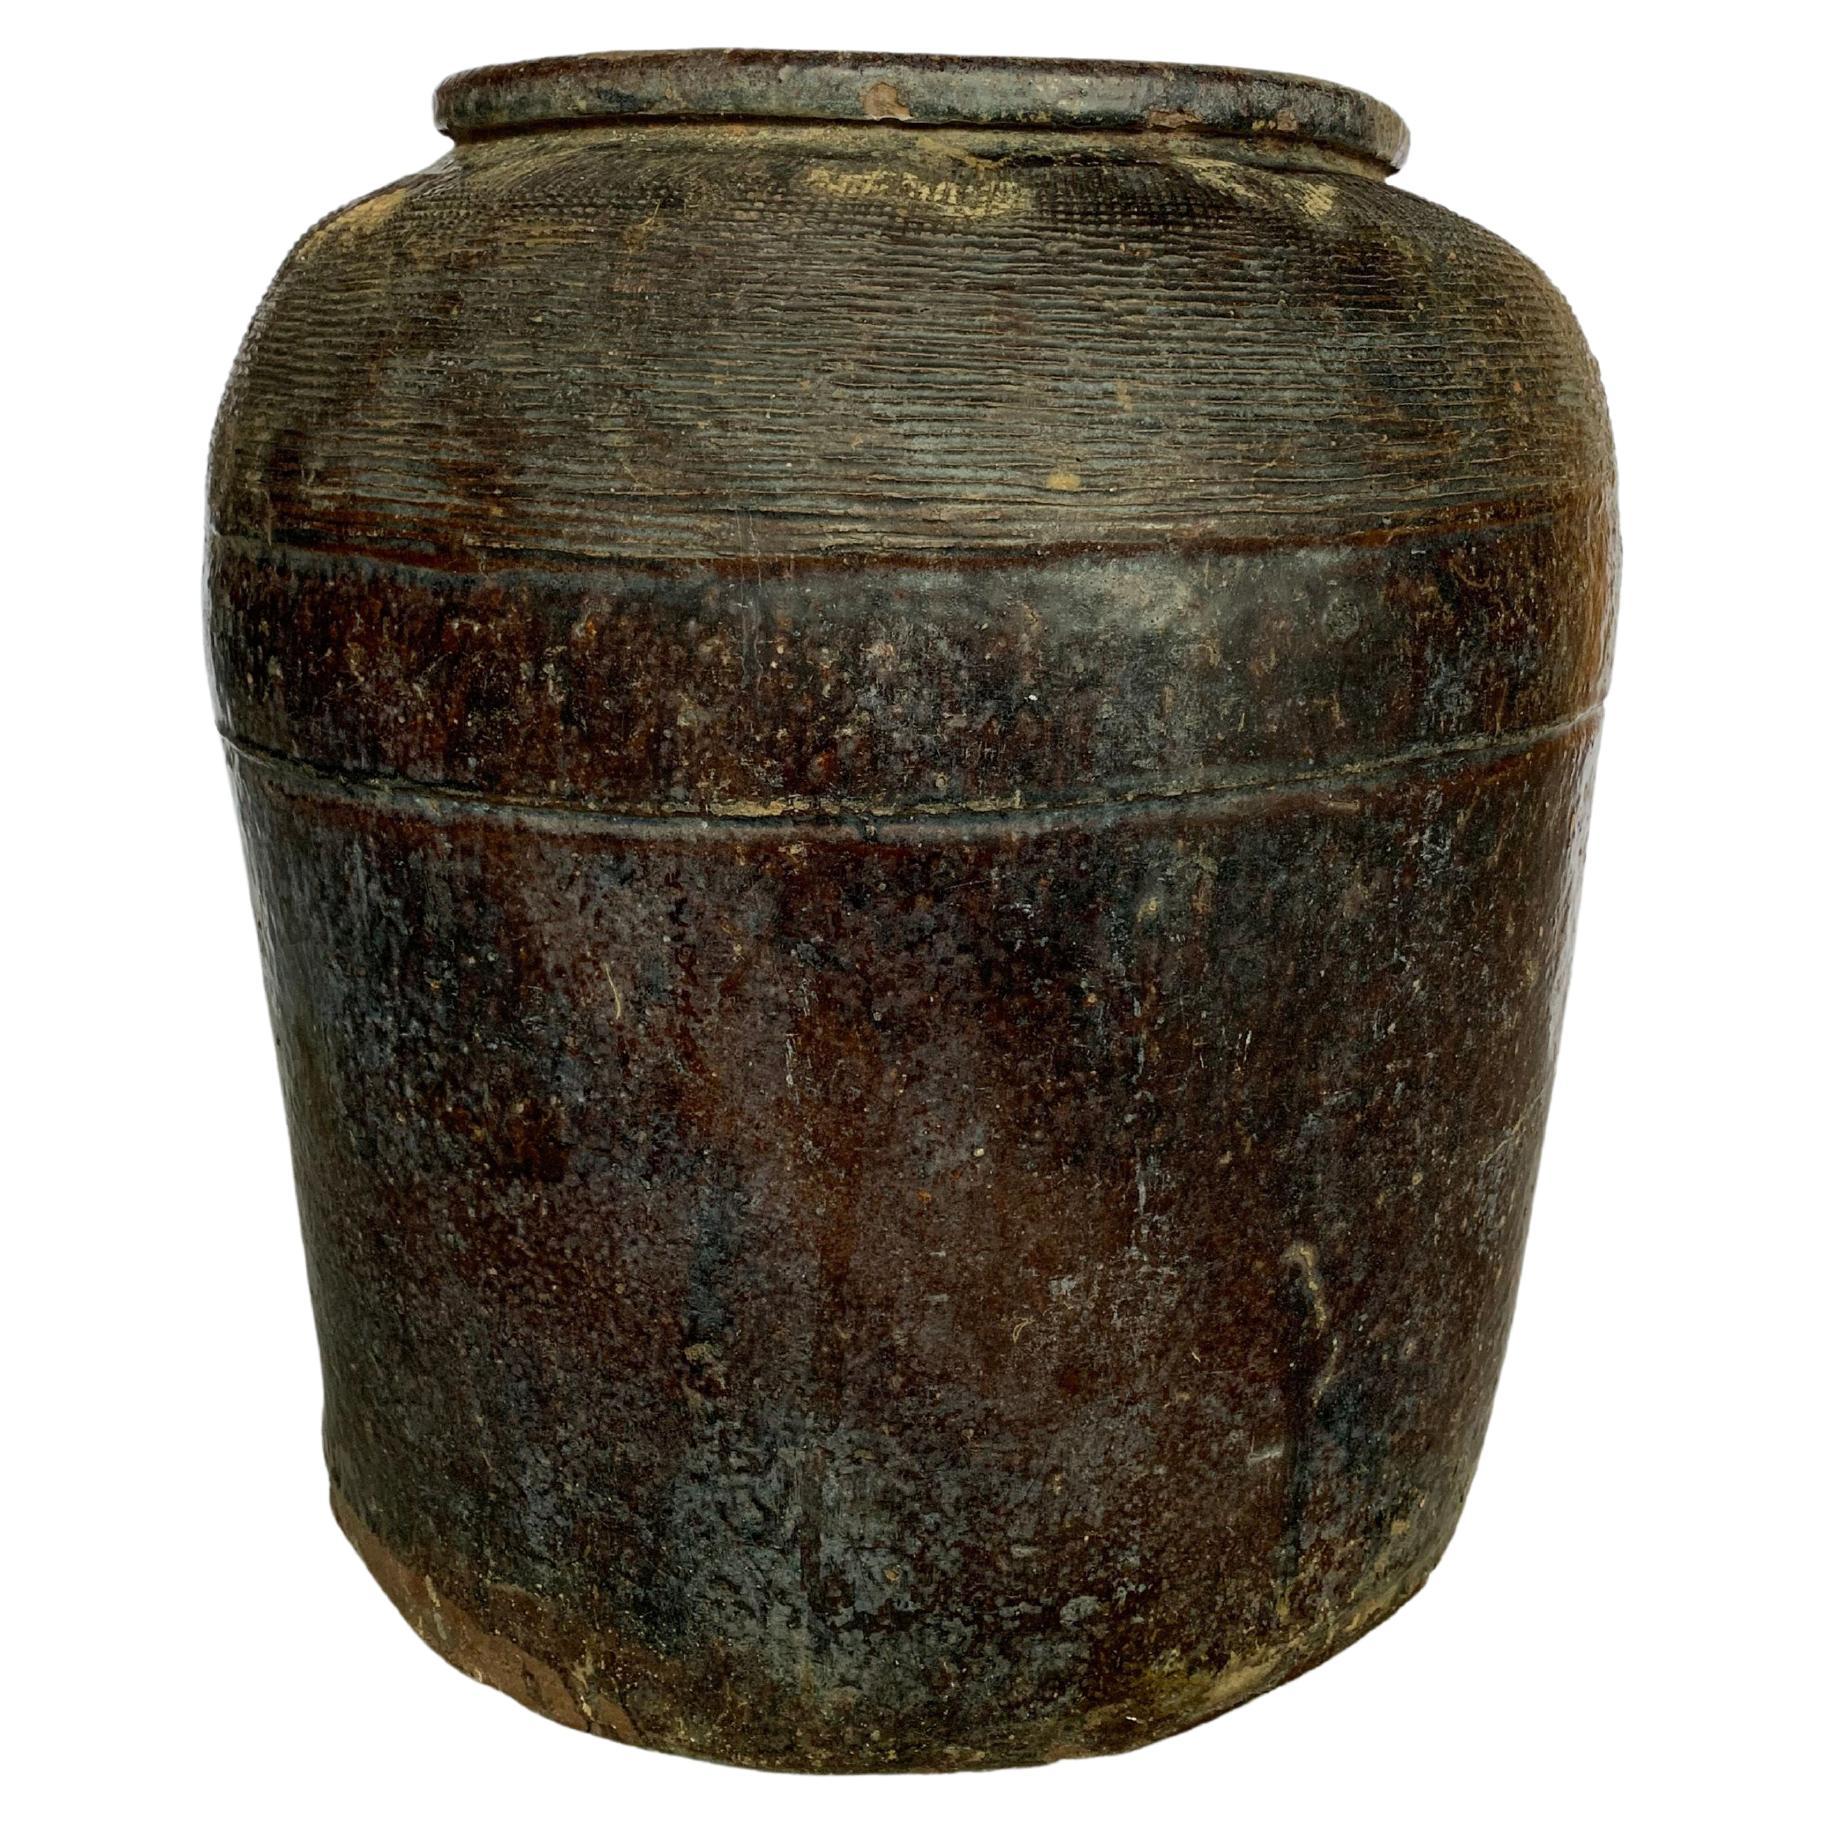 Antique Chinese Brown Glazed Ceramic Salty Egg Jar, c.1900